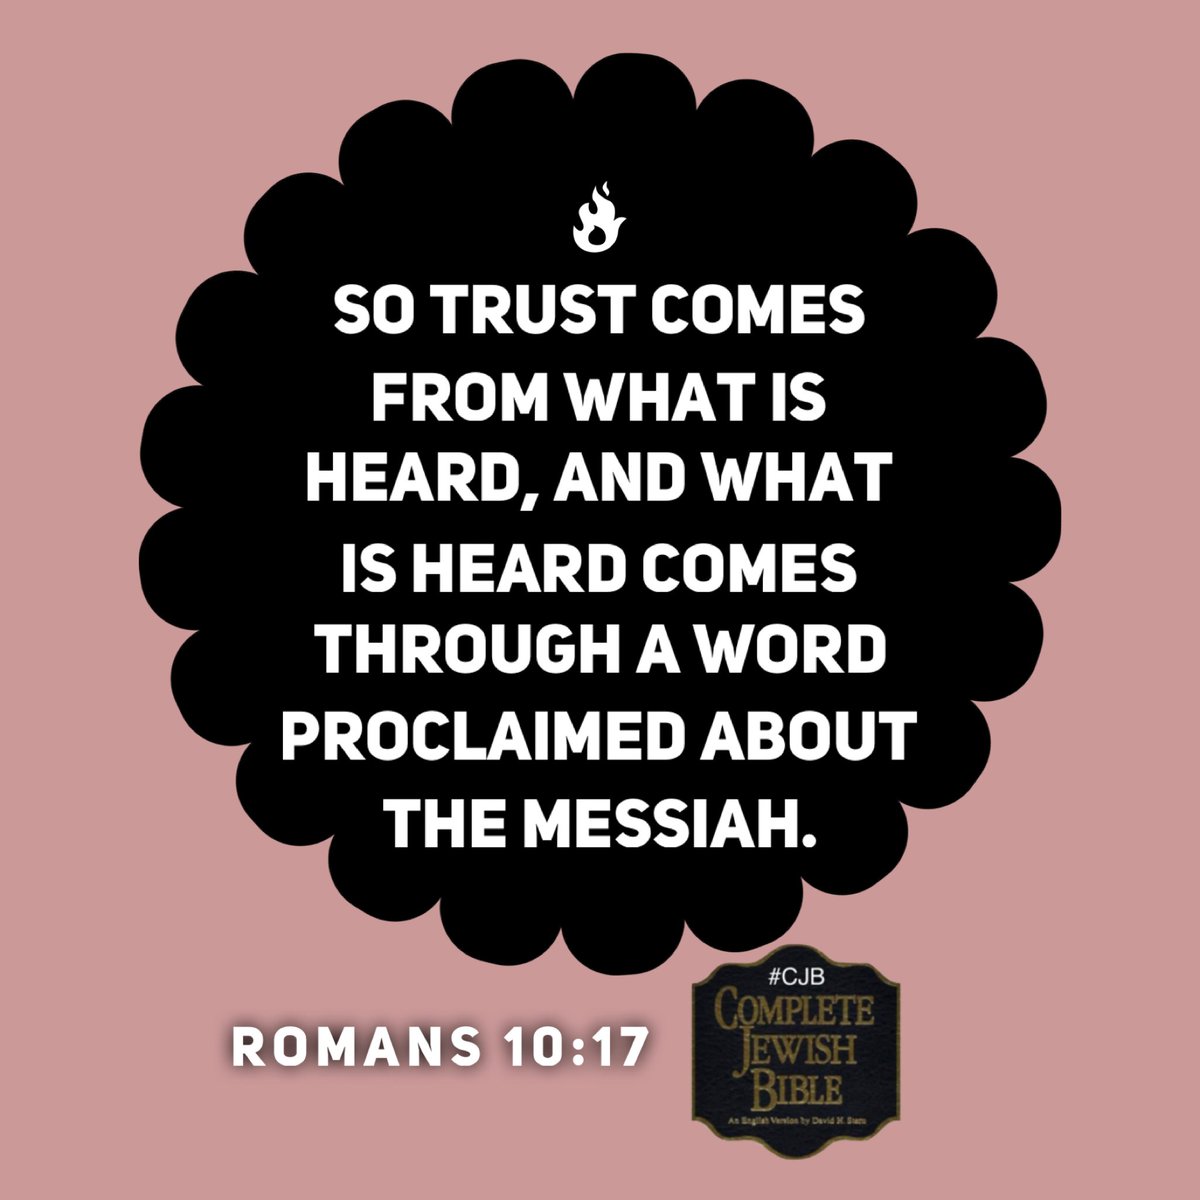 Romans 10:17 #CJB #CompleteJewishBible #VerseOfTheDay